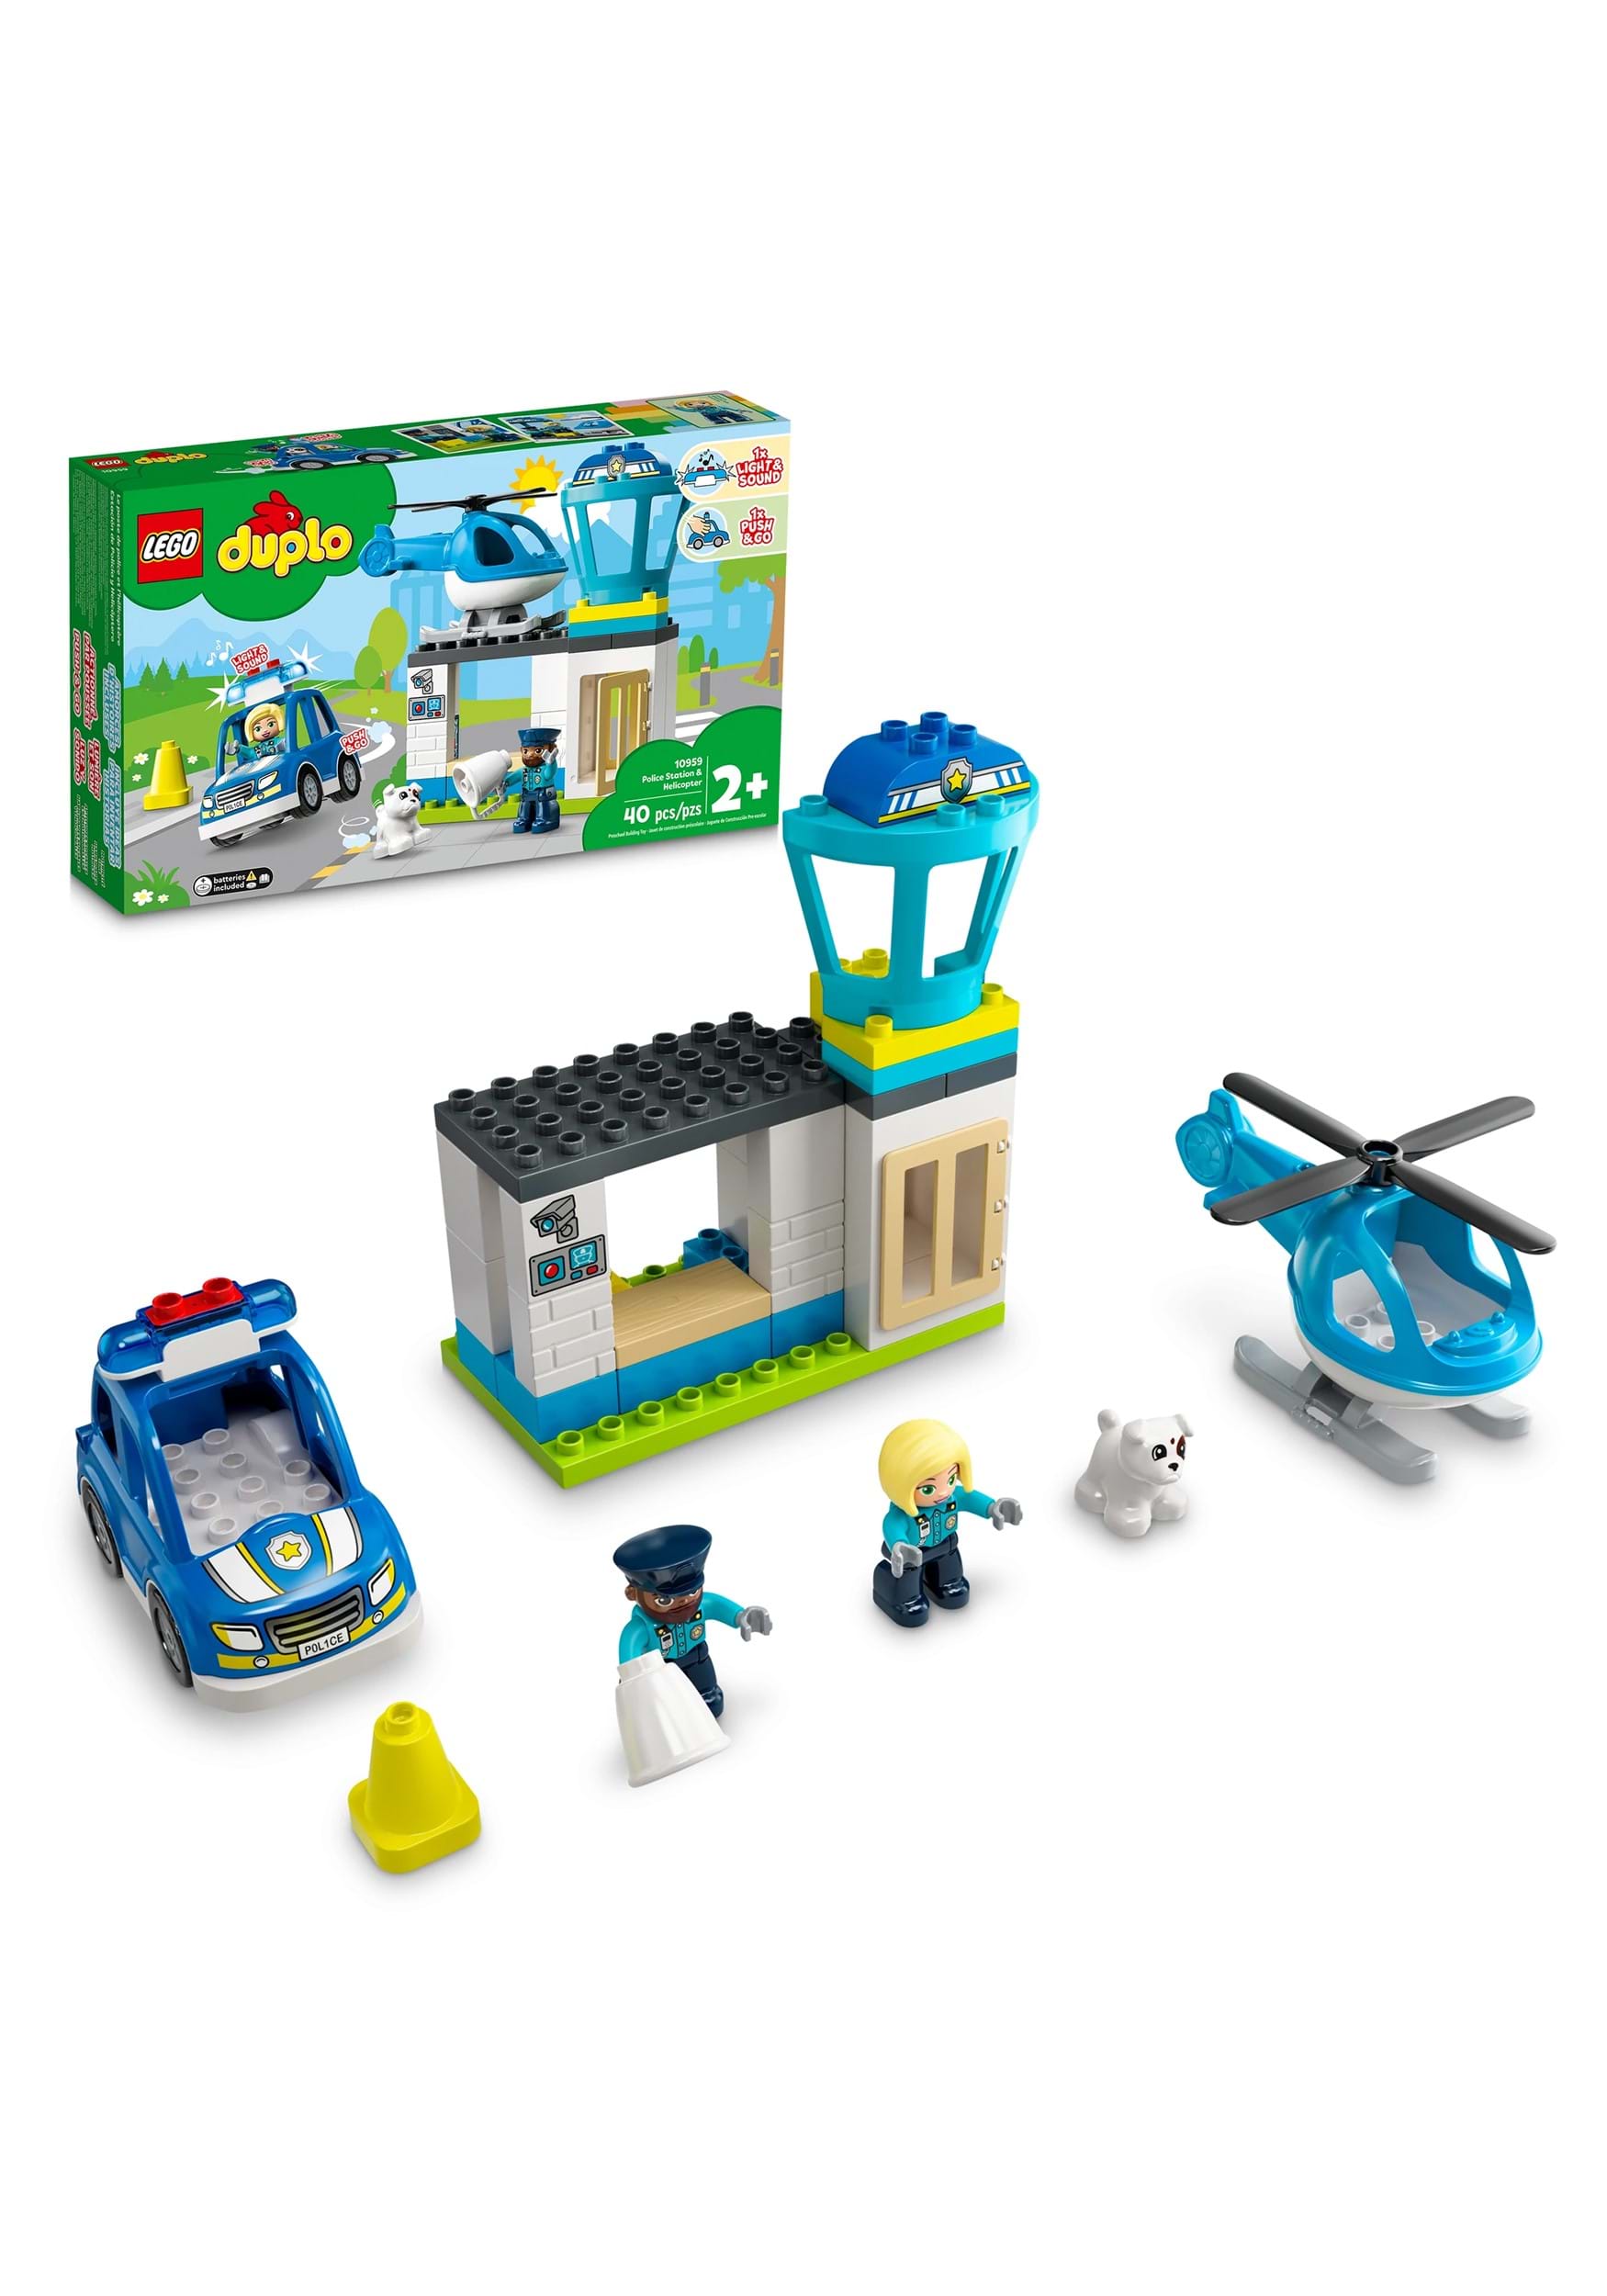 LEGO Duplo Police & Helicopter Building Set